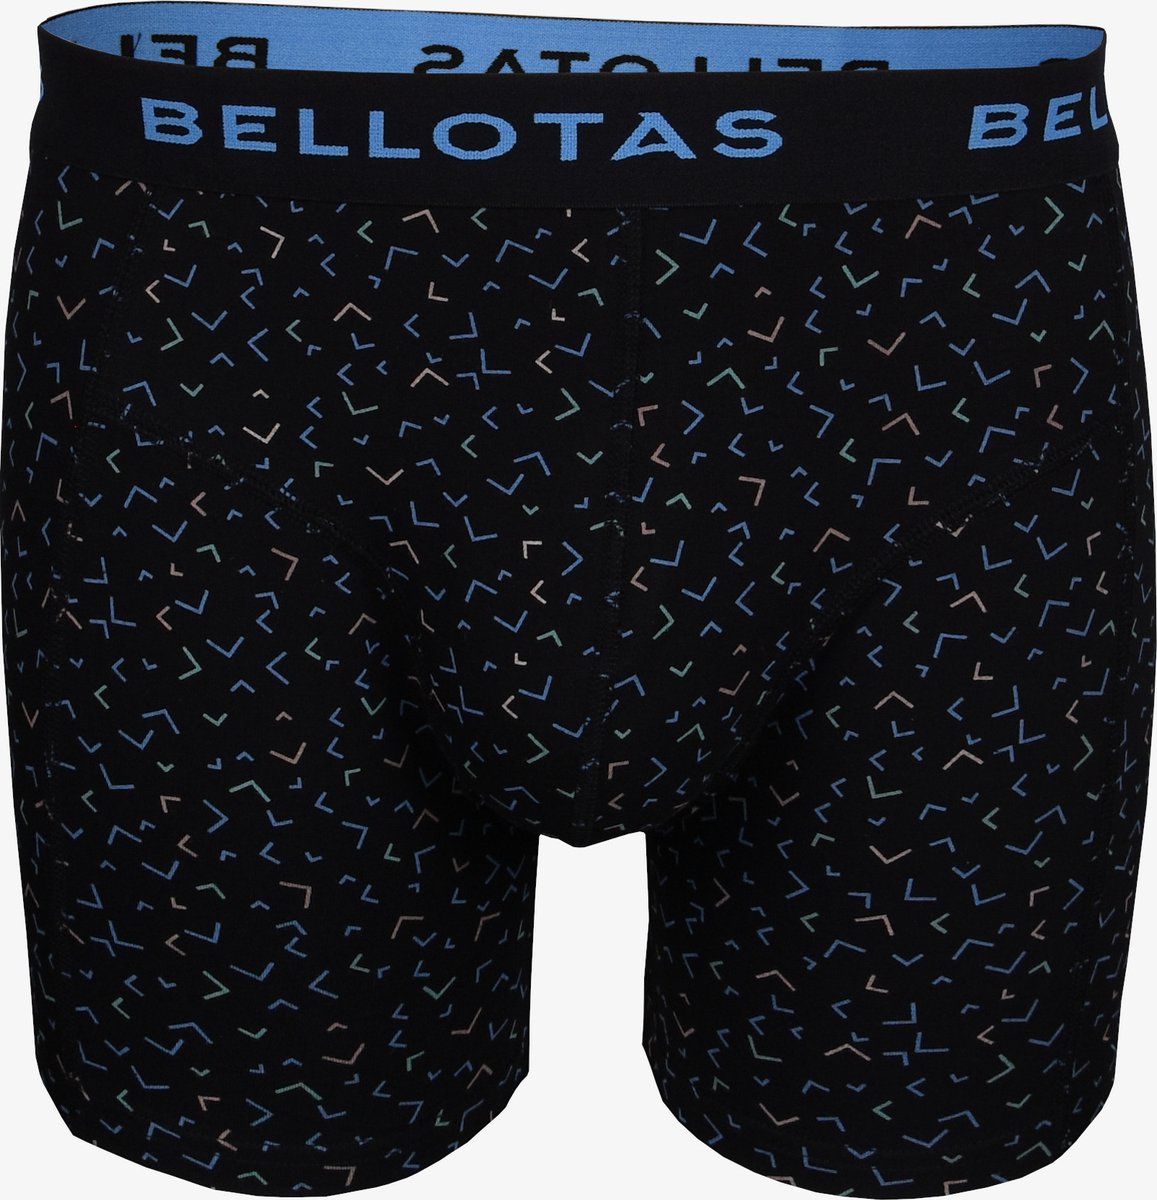 Bellotas - Boxershort - Gilles M